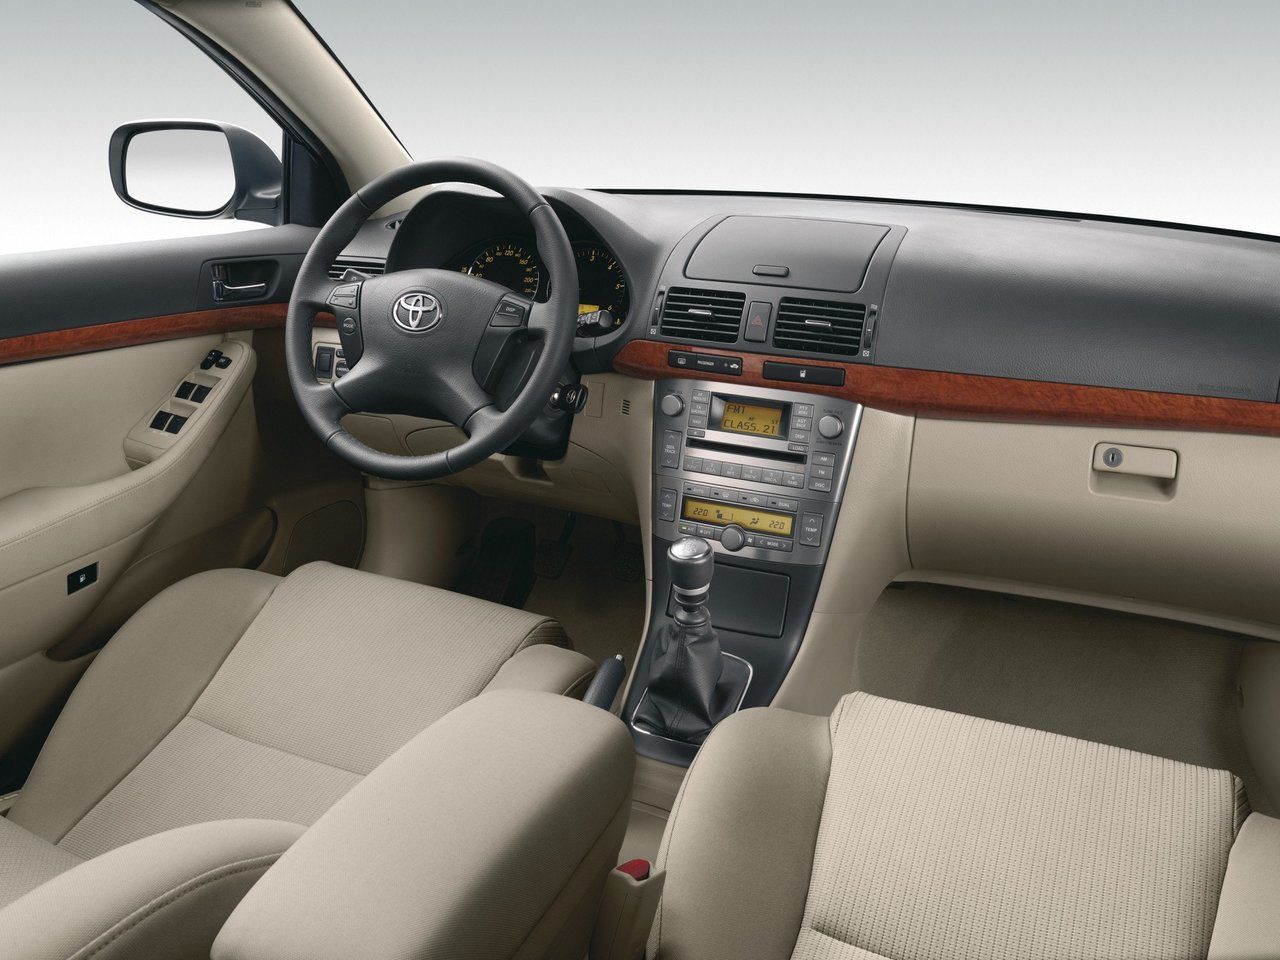 Toyota Avensis 2007 салон